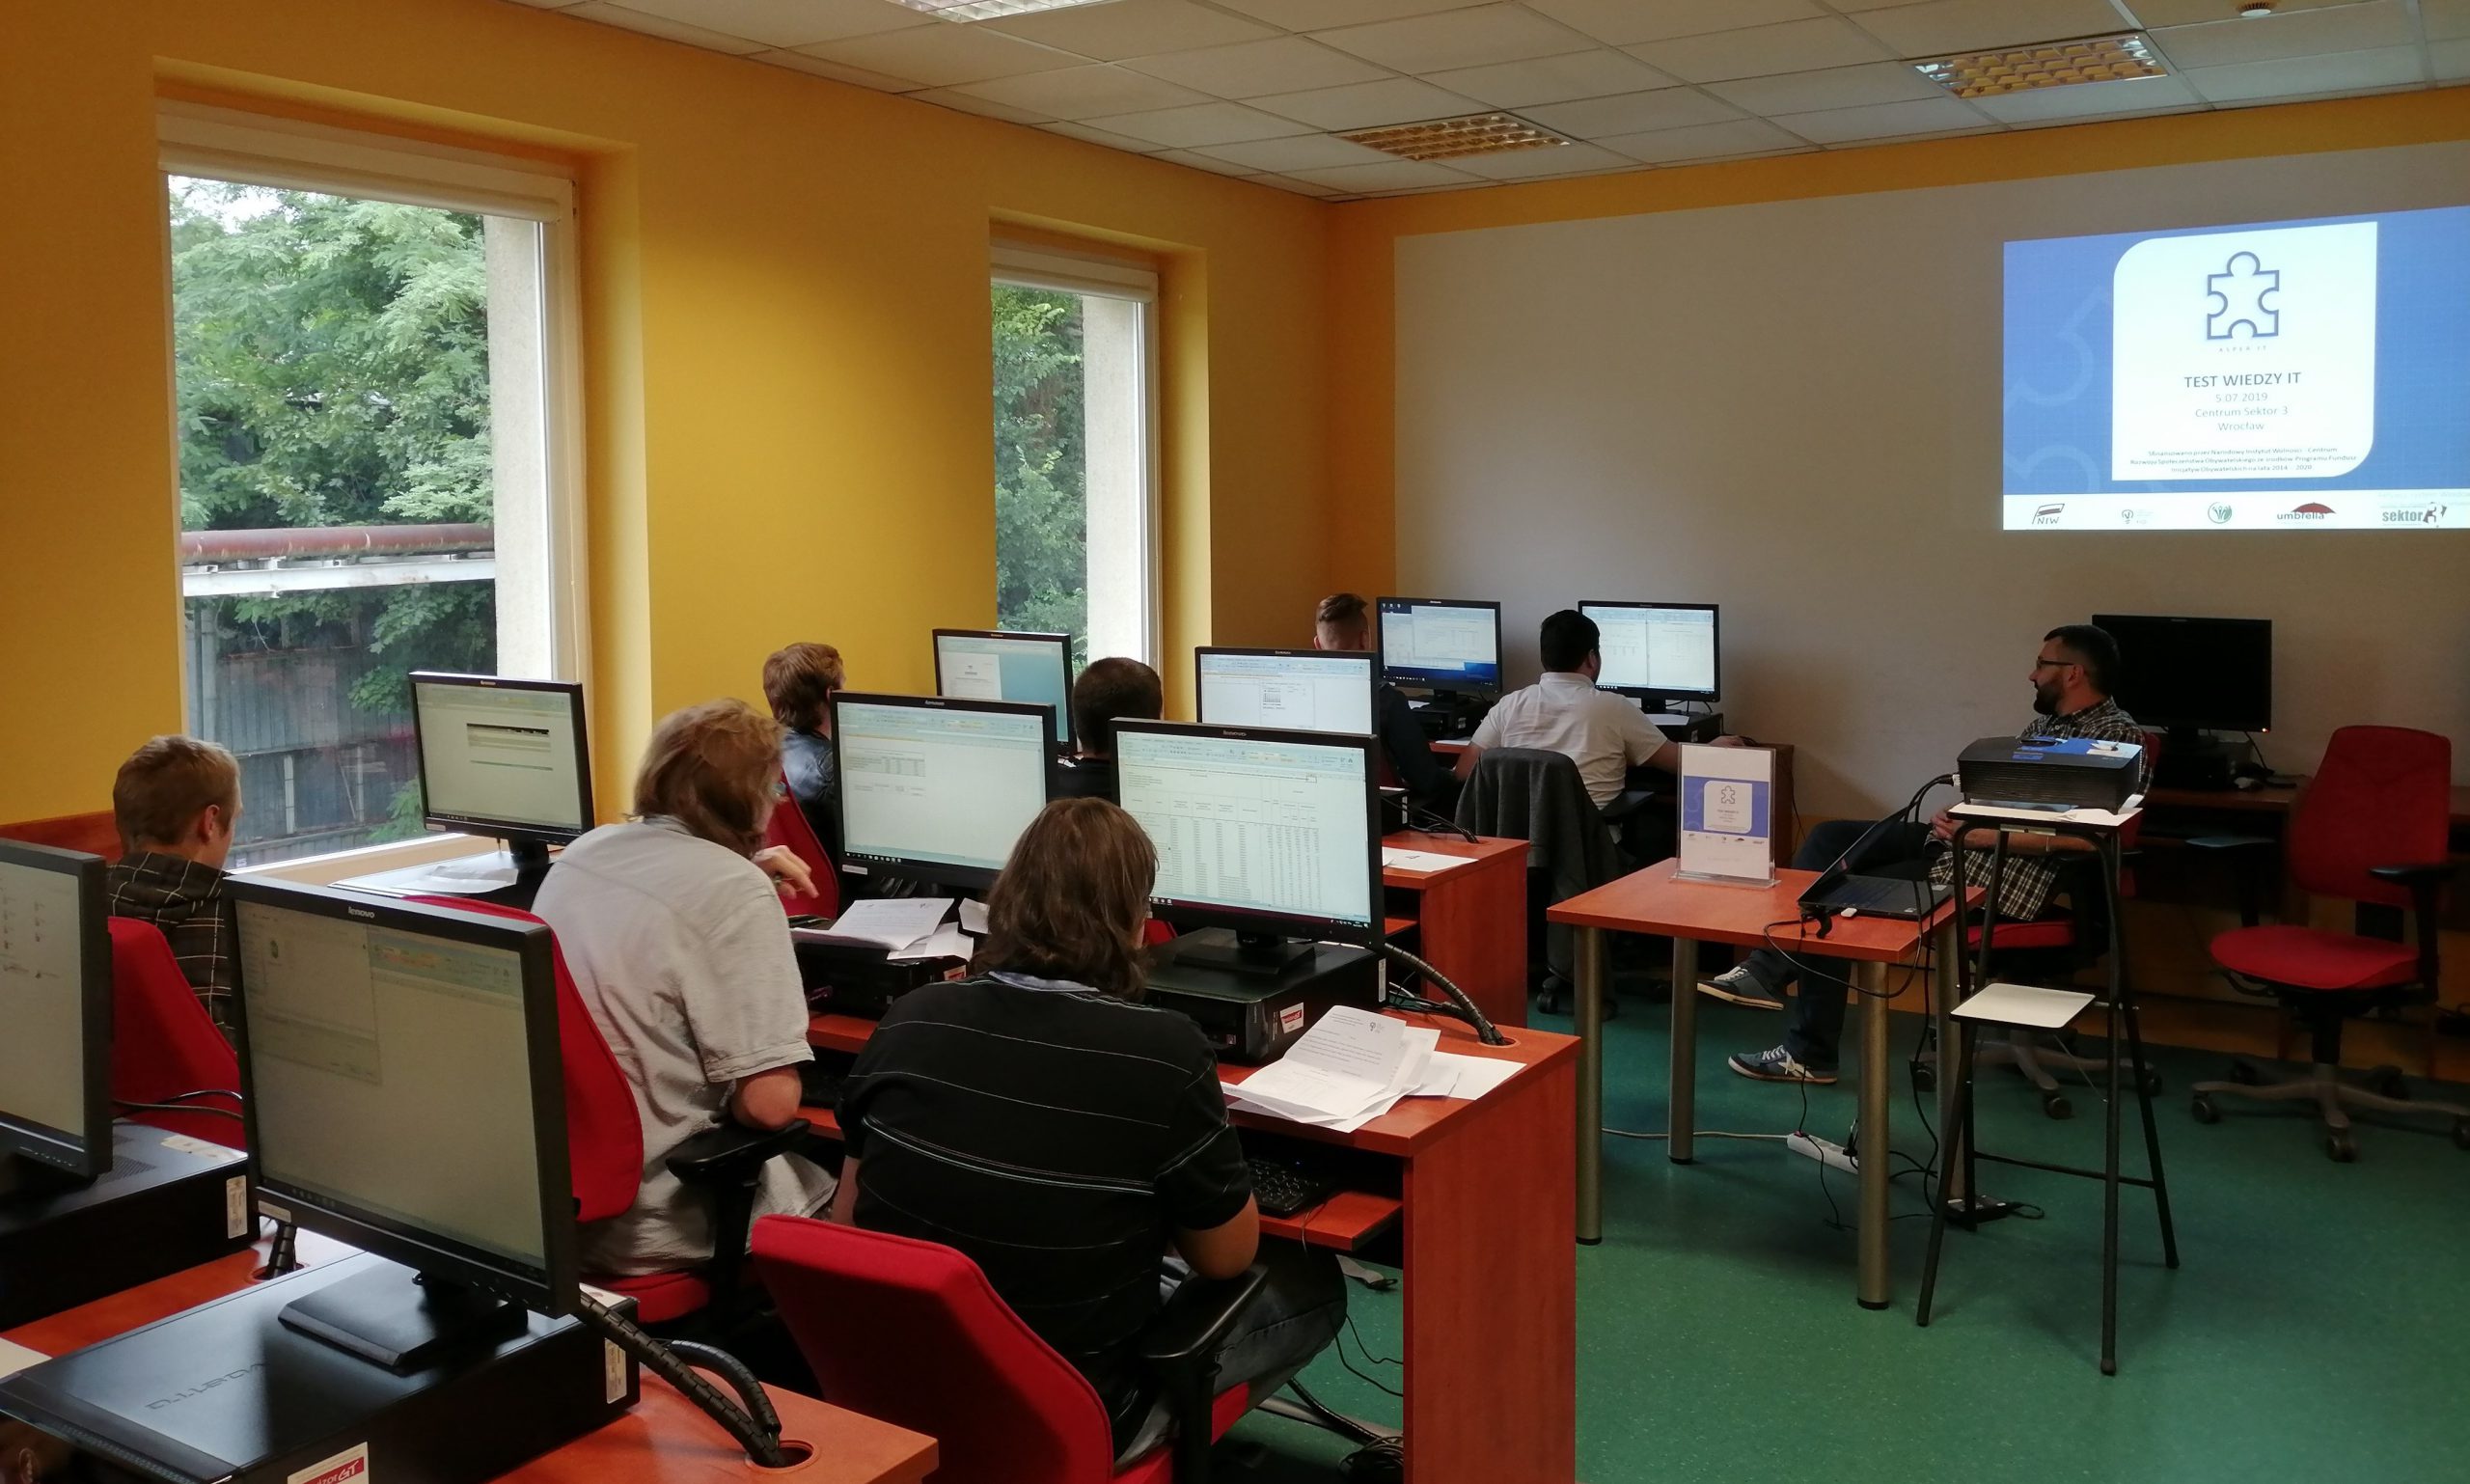 IT knowledge test – asperIT Wrocław I, July 5, 2019